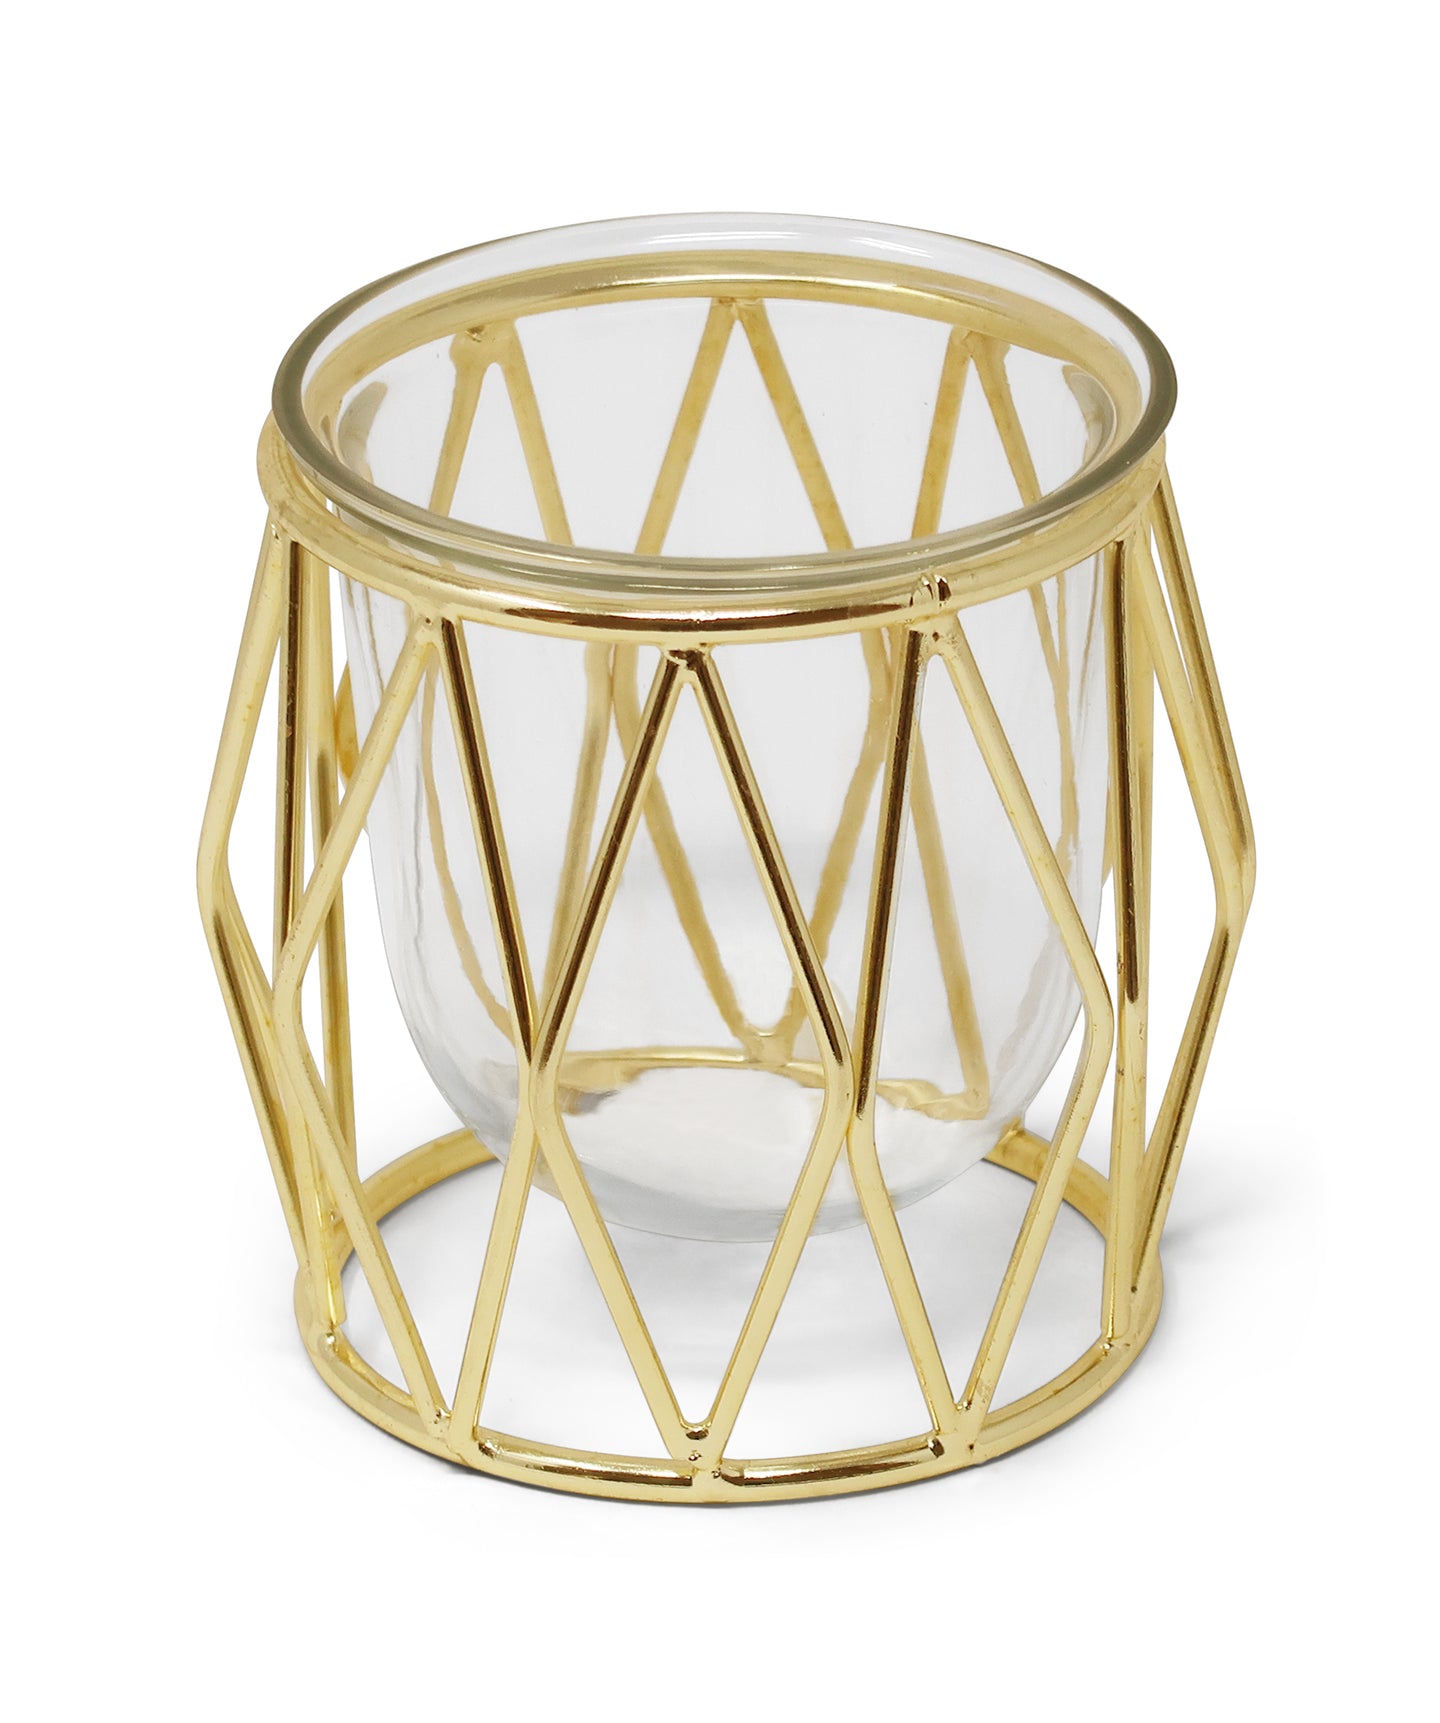 Gold Brass Hurricane Candle Holder - Diamond Shaped Design